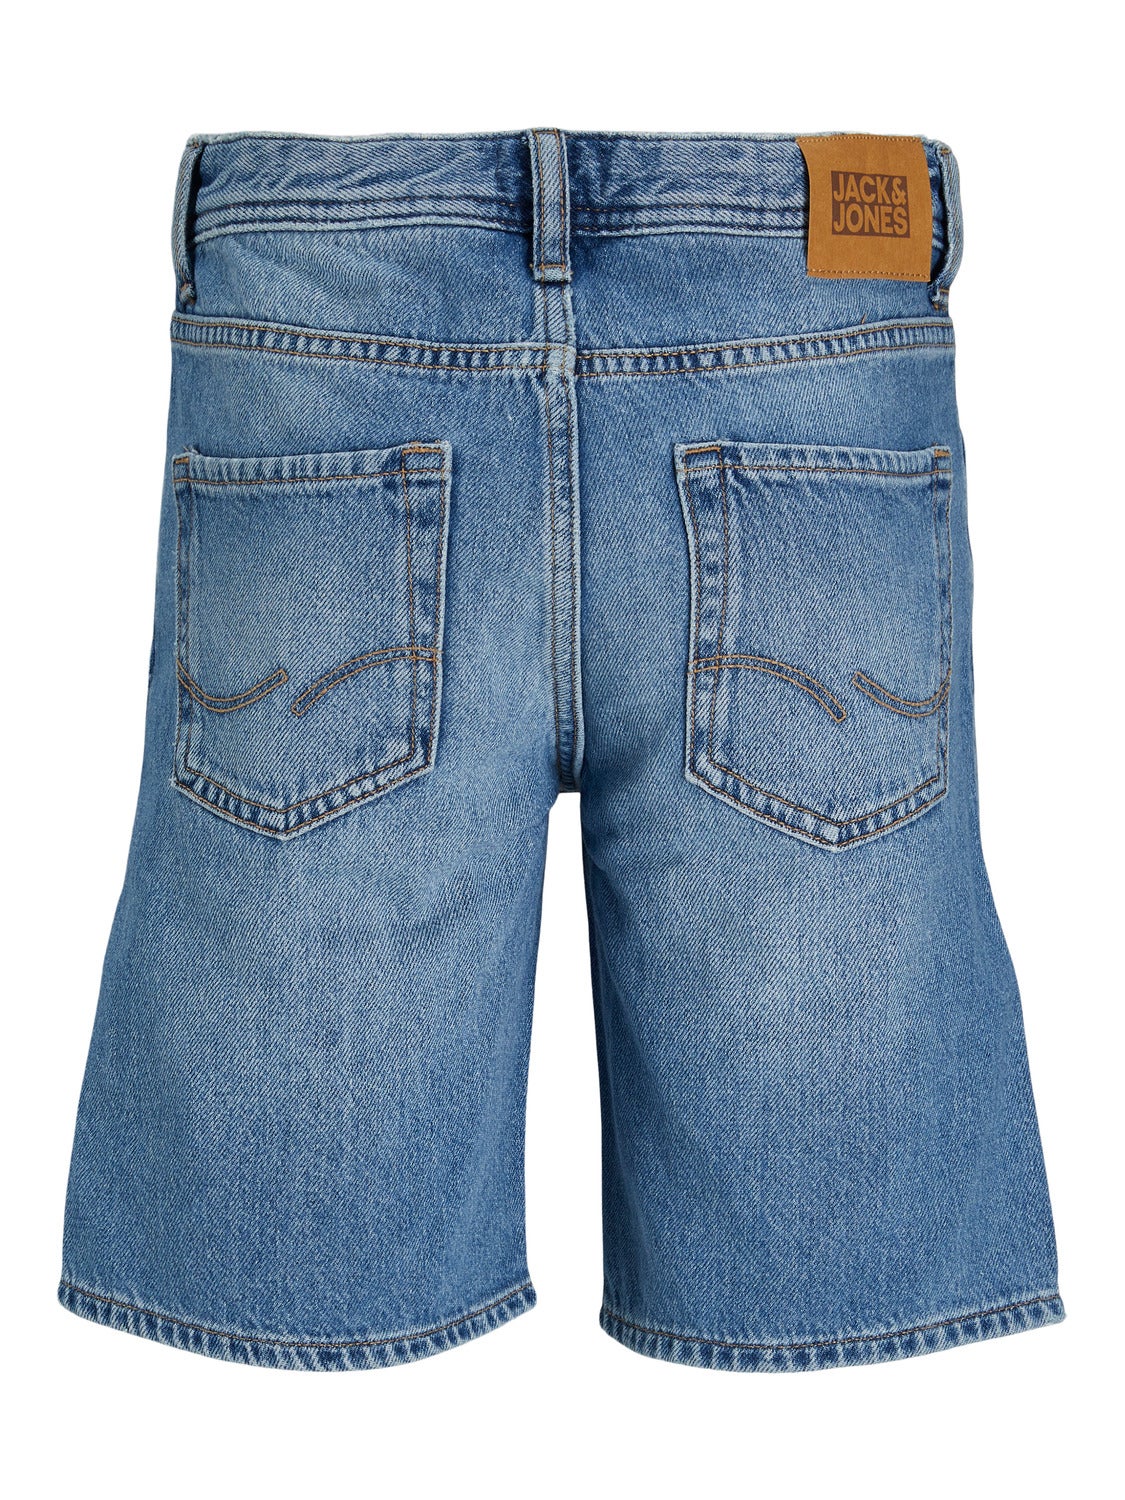 Men Regular Fit Jack Jones Denim Jeans at Rs 750/piece in New Delhi | ID:  22816051962